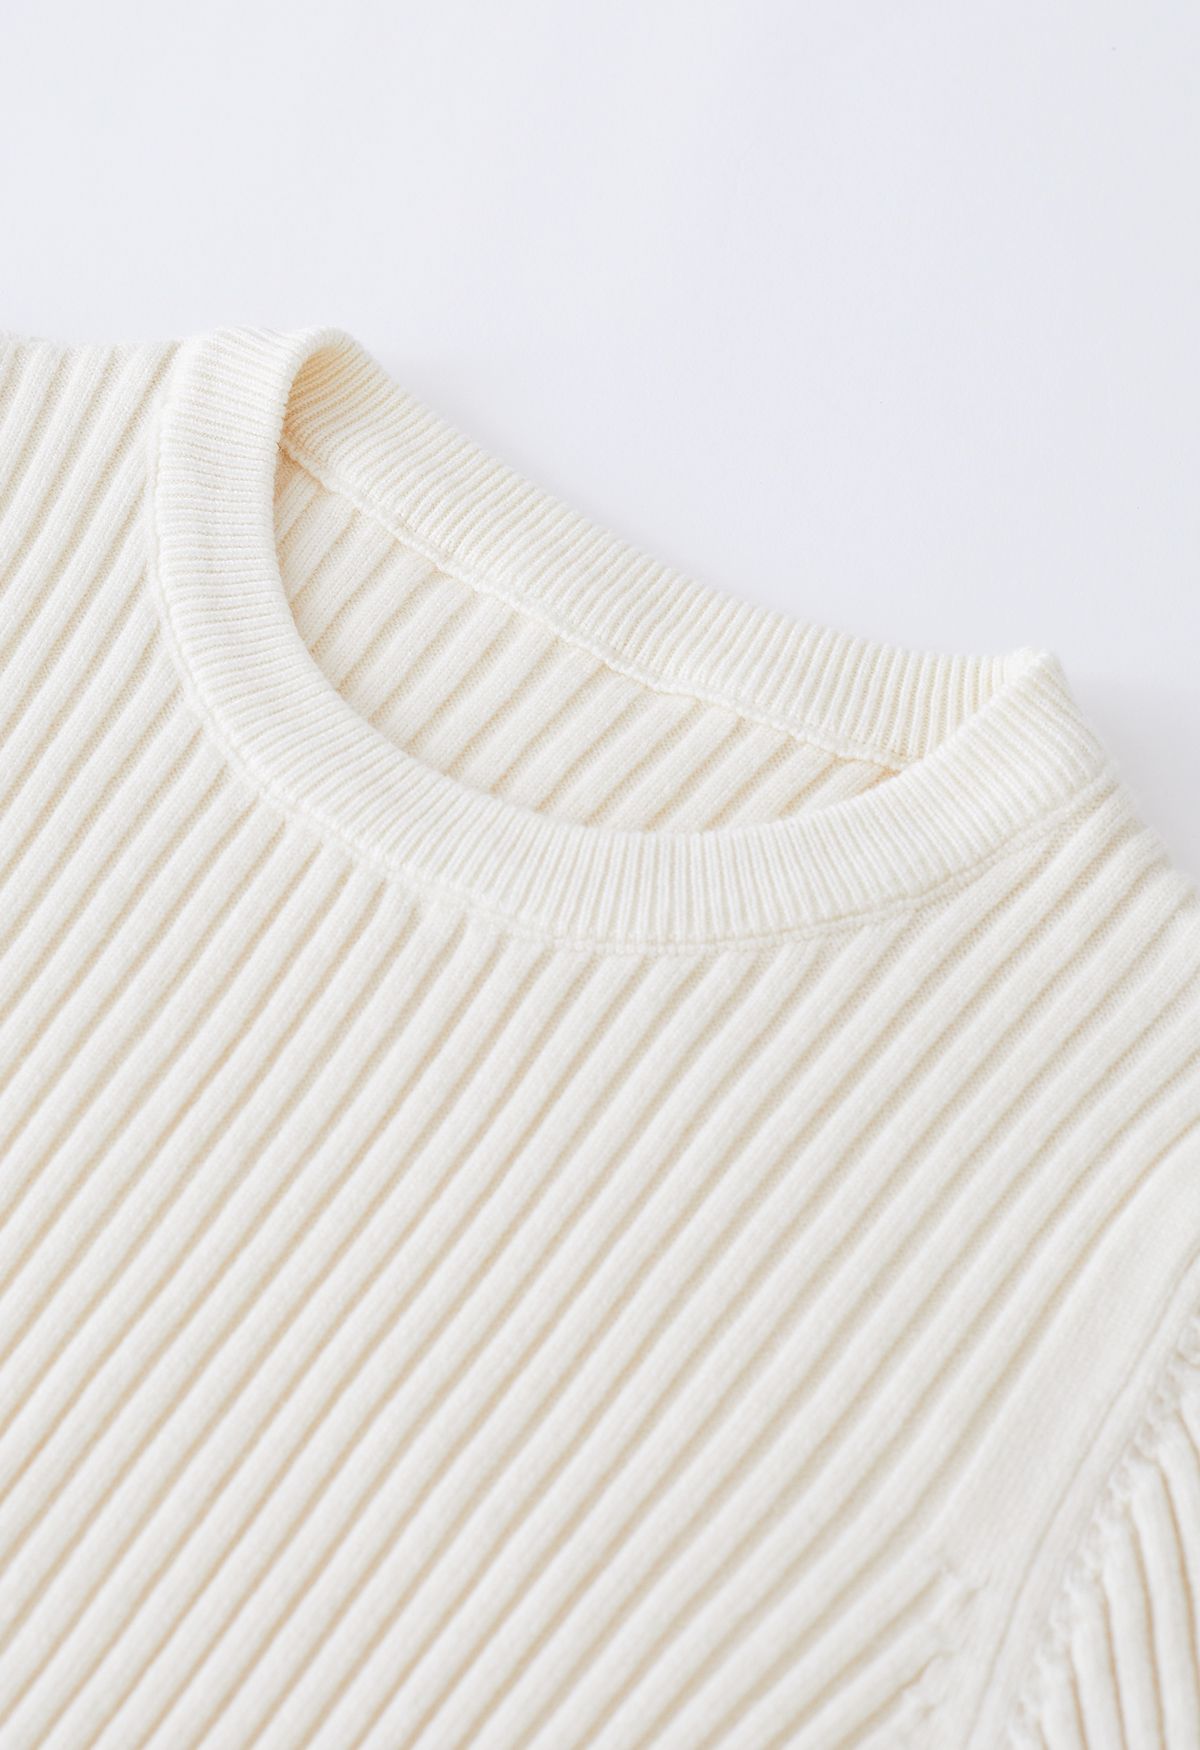 Ribbed Texture Frilling Midi Dress in Cream - Retro, Indie and Unique ...